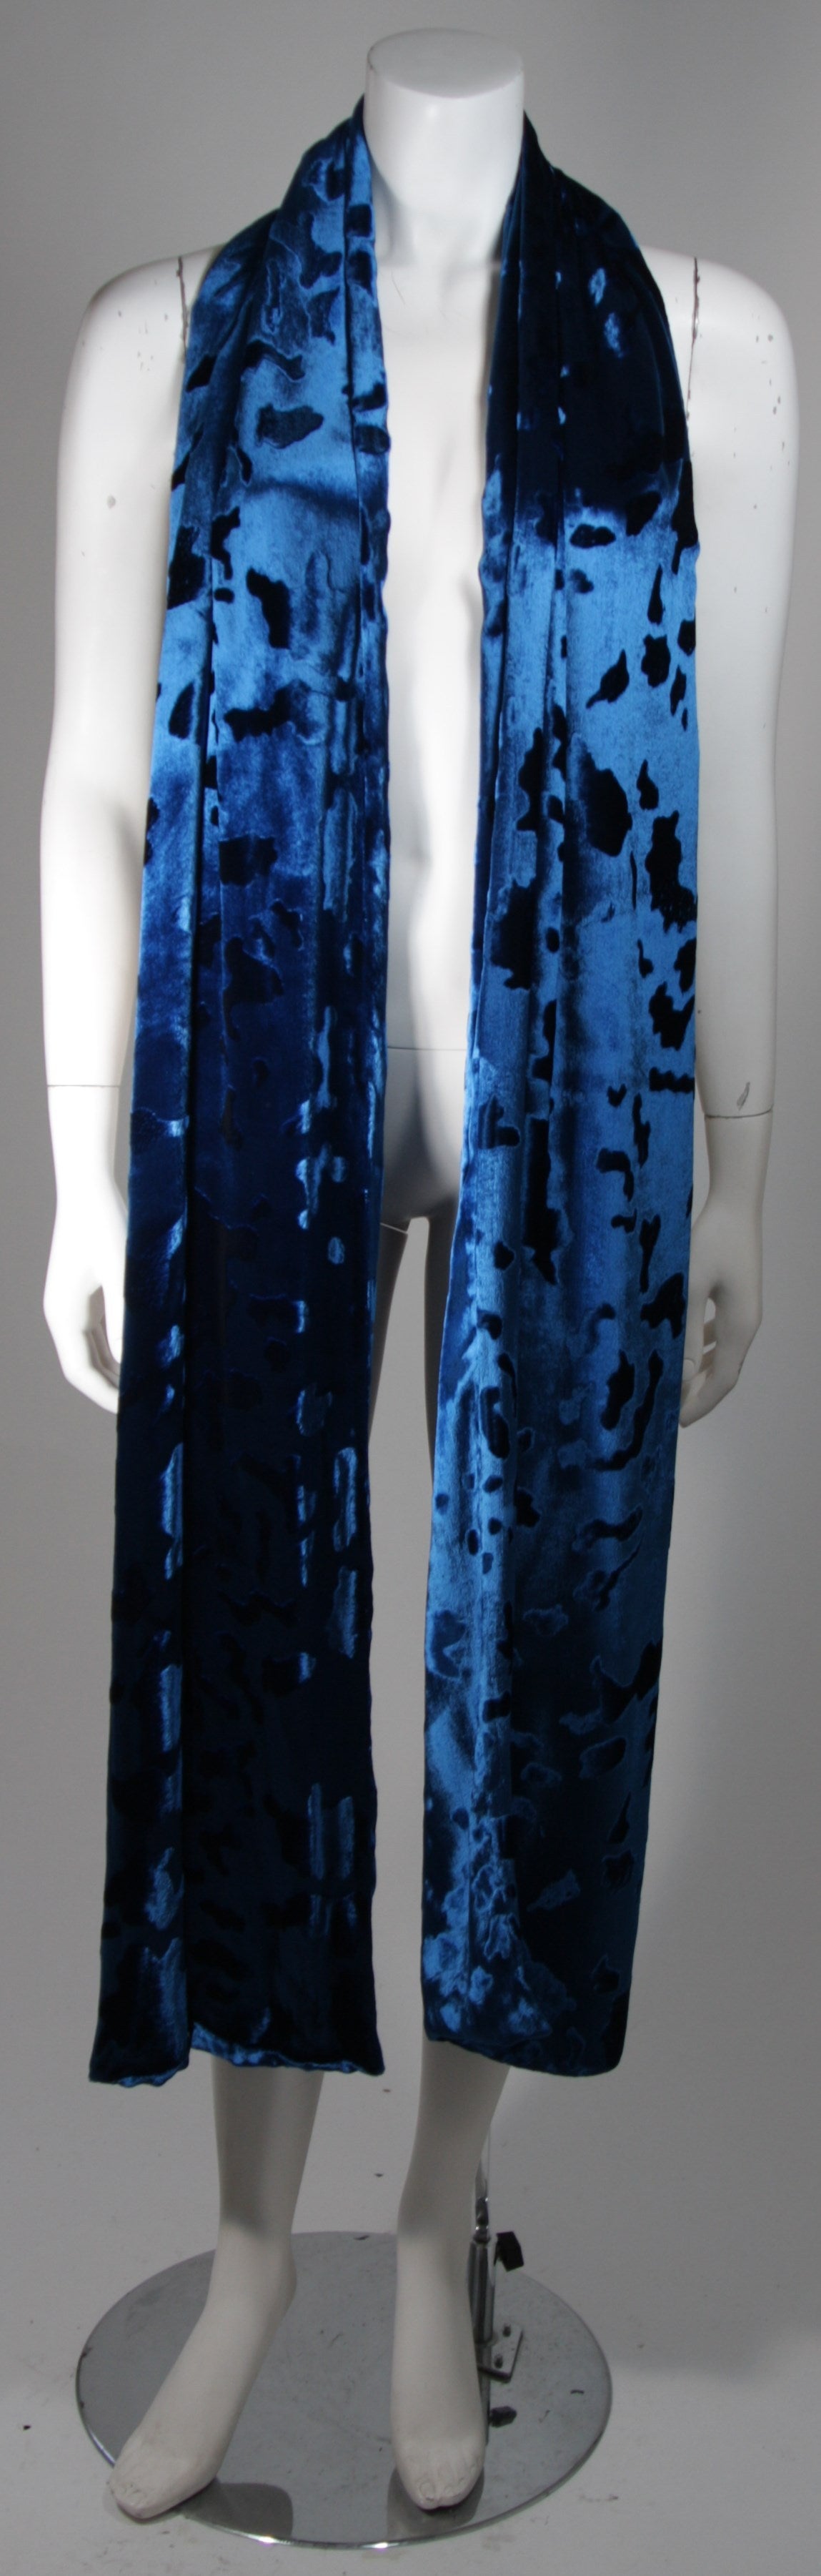 Galanos Couture Vibrant Blue Velvet Evening Ensemble Size Small 5